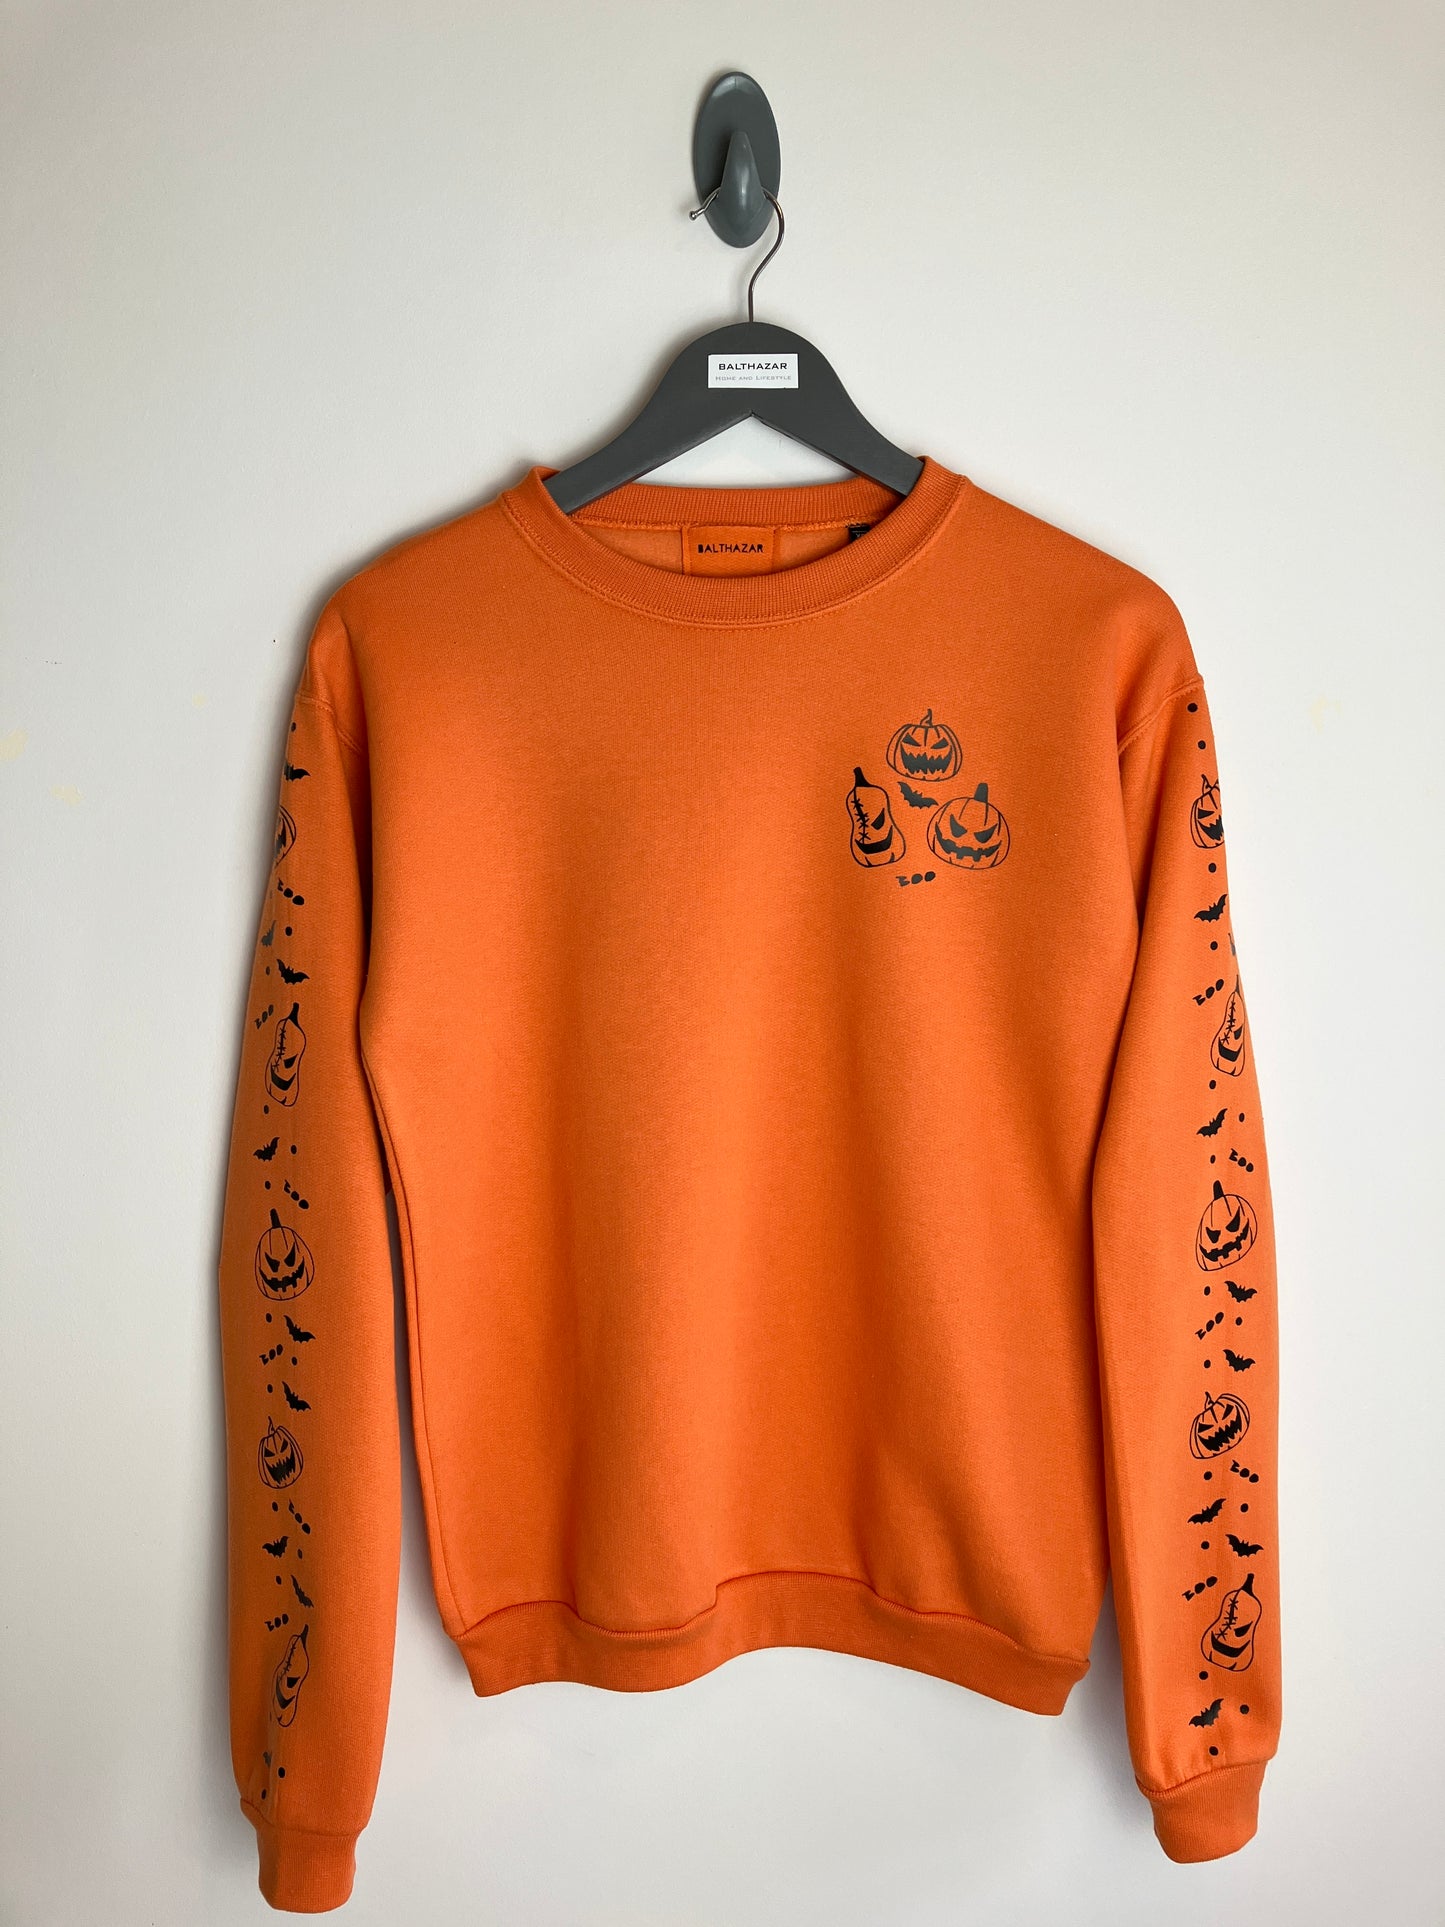 Pumpkin headed confetti sleeved sweatshirt